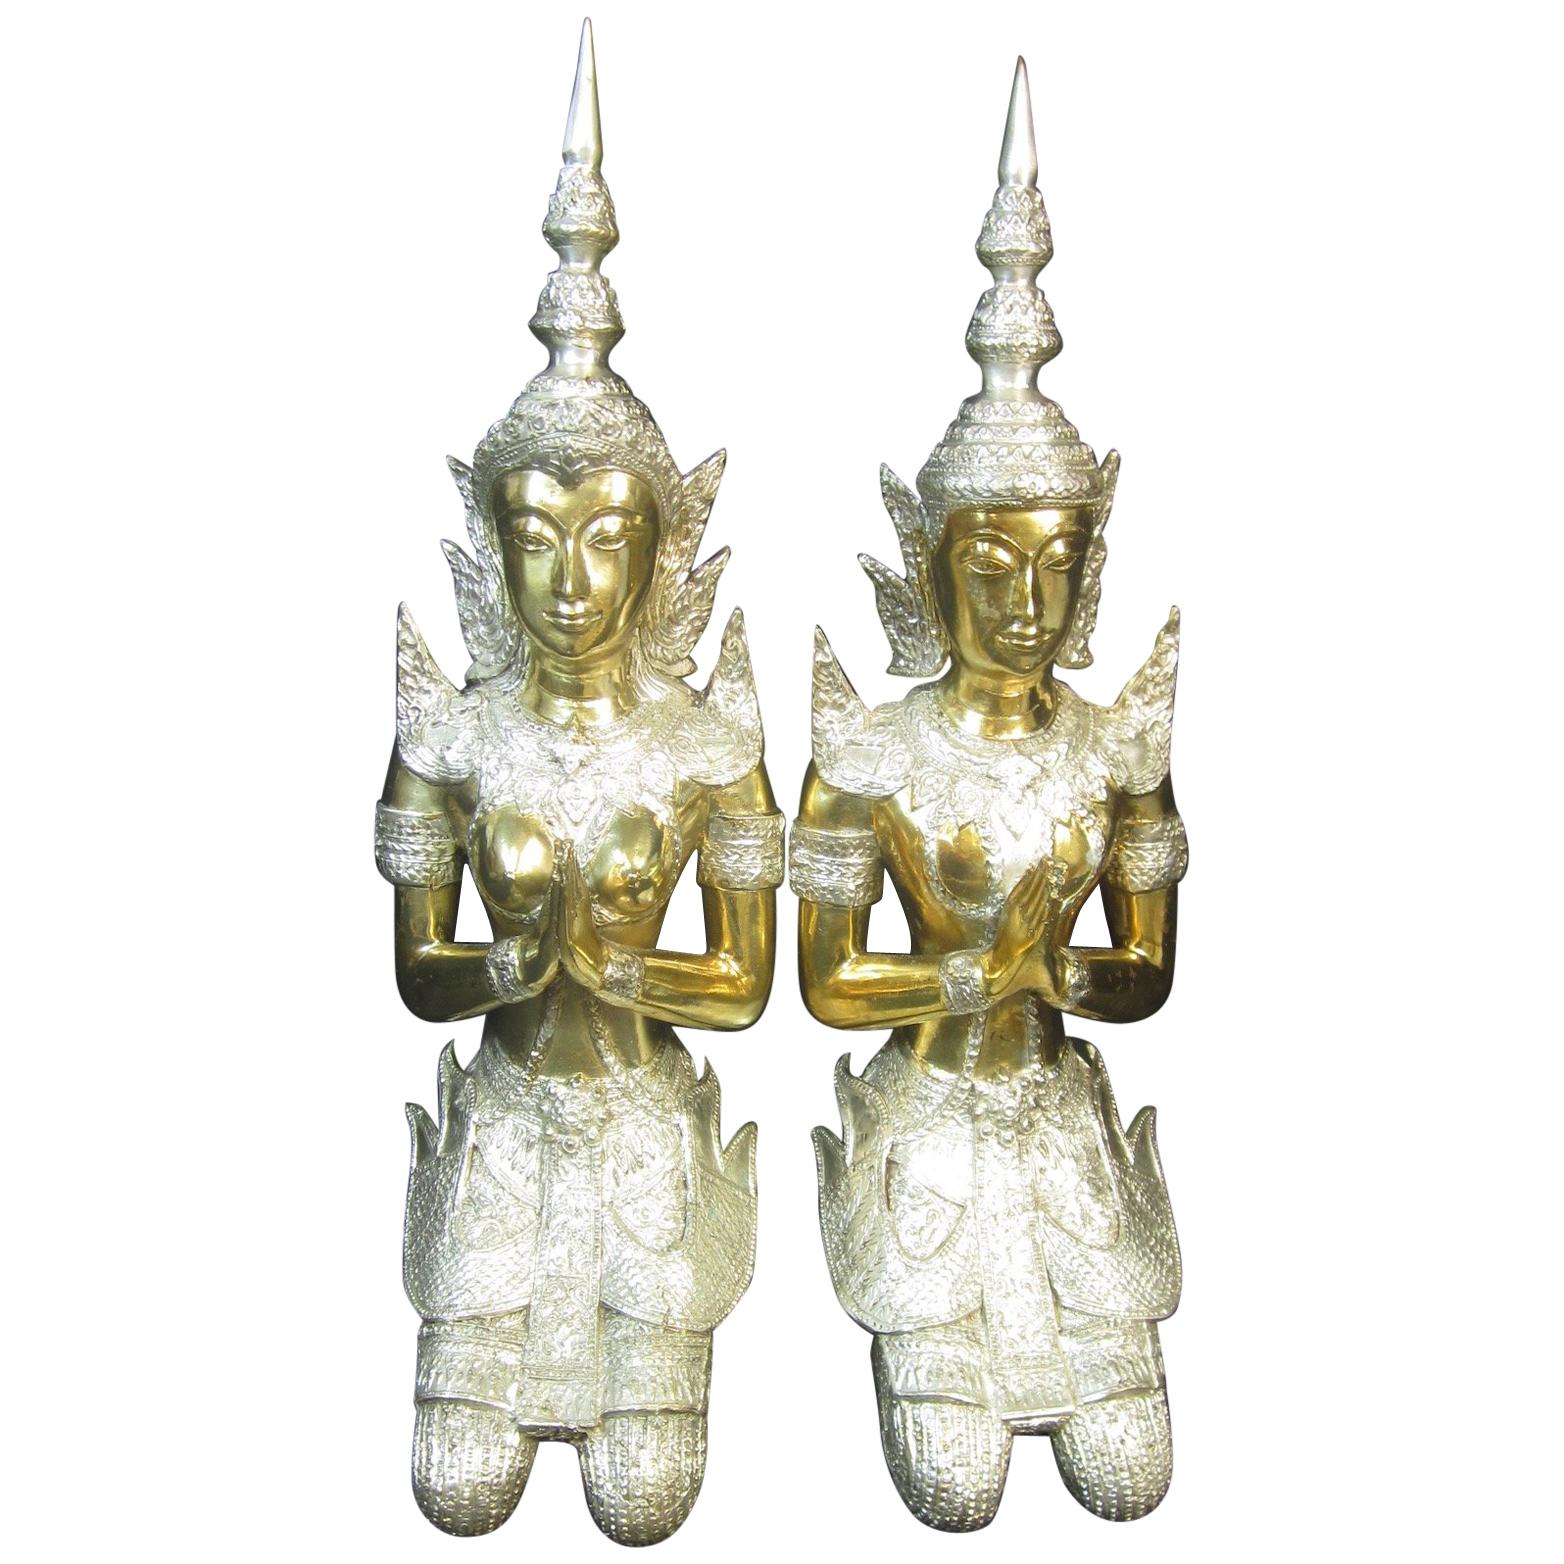 Thai Figures For Sale